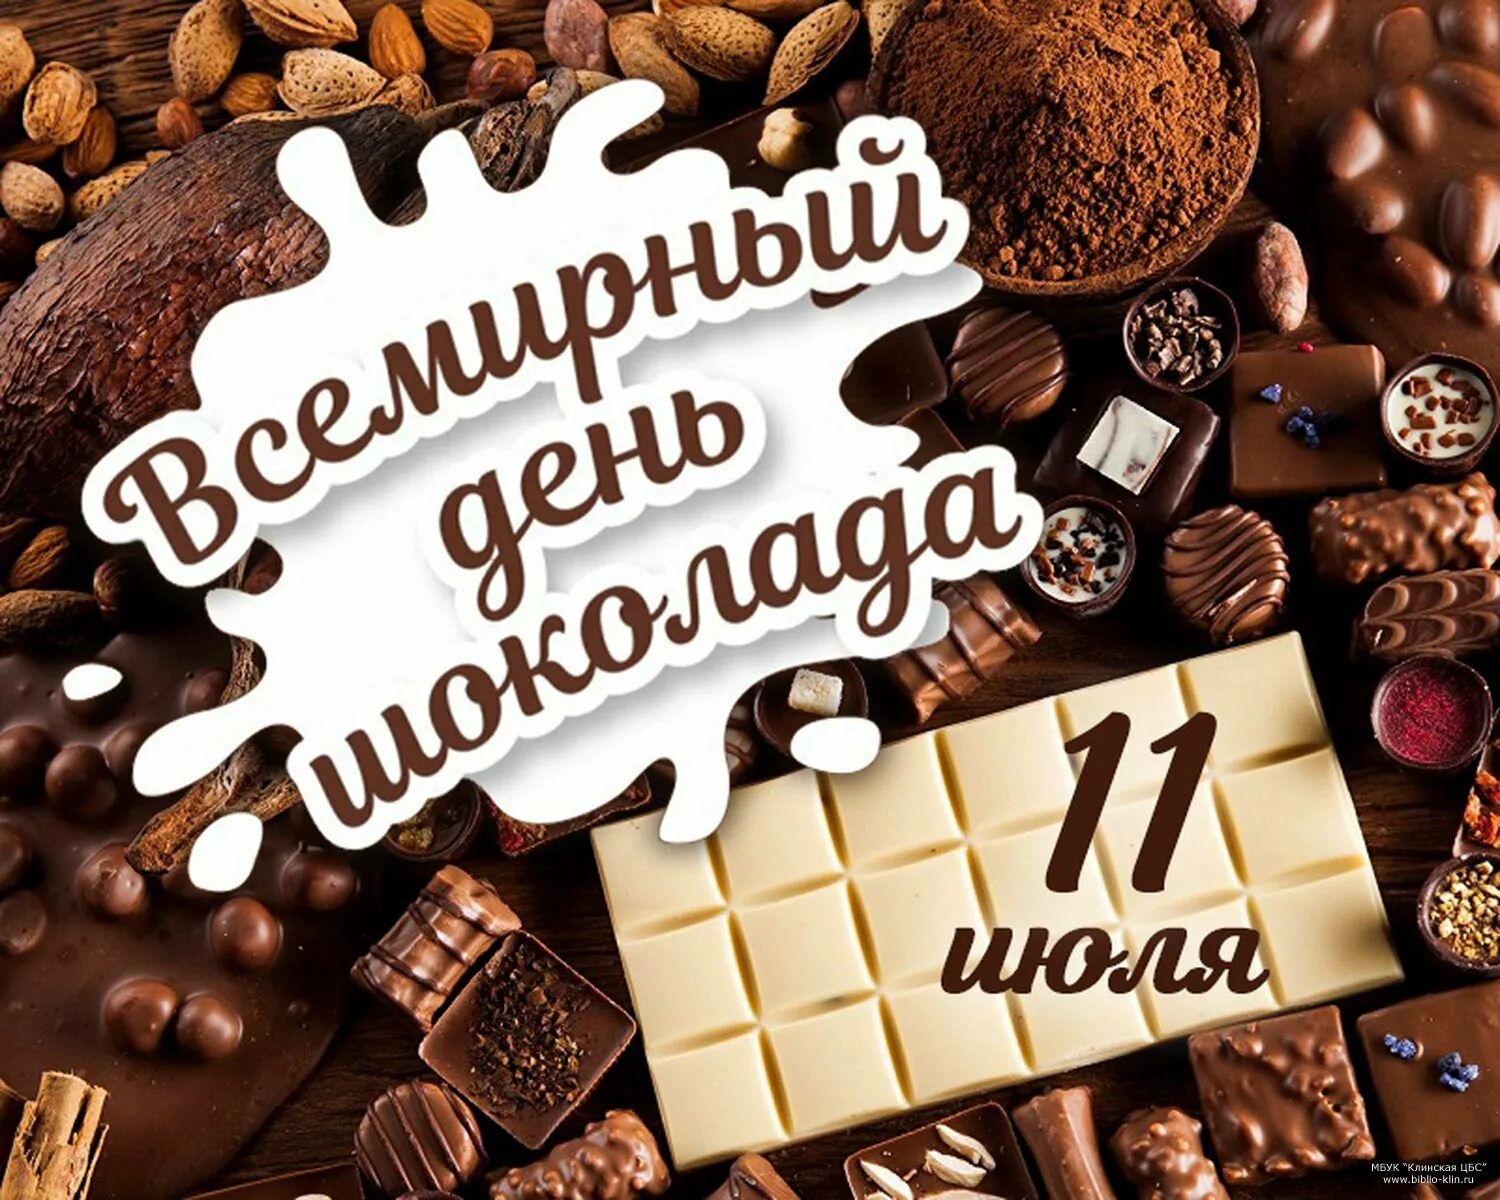 Шоколад 11